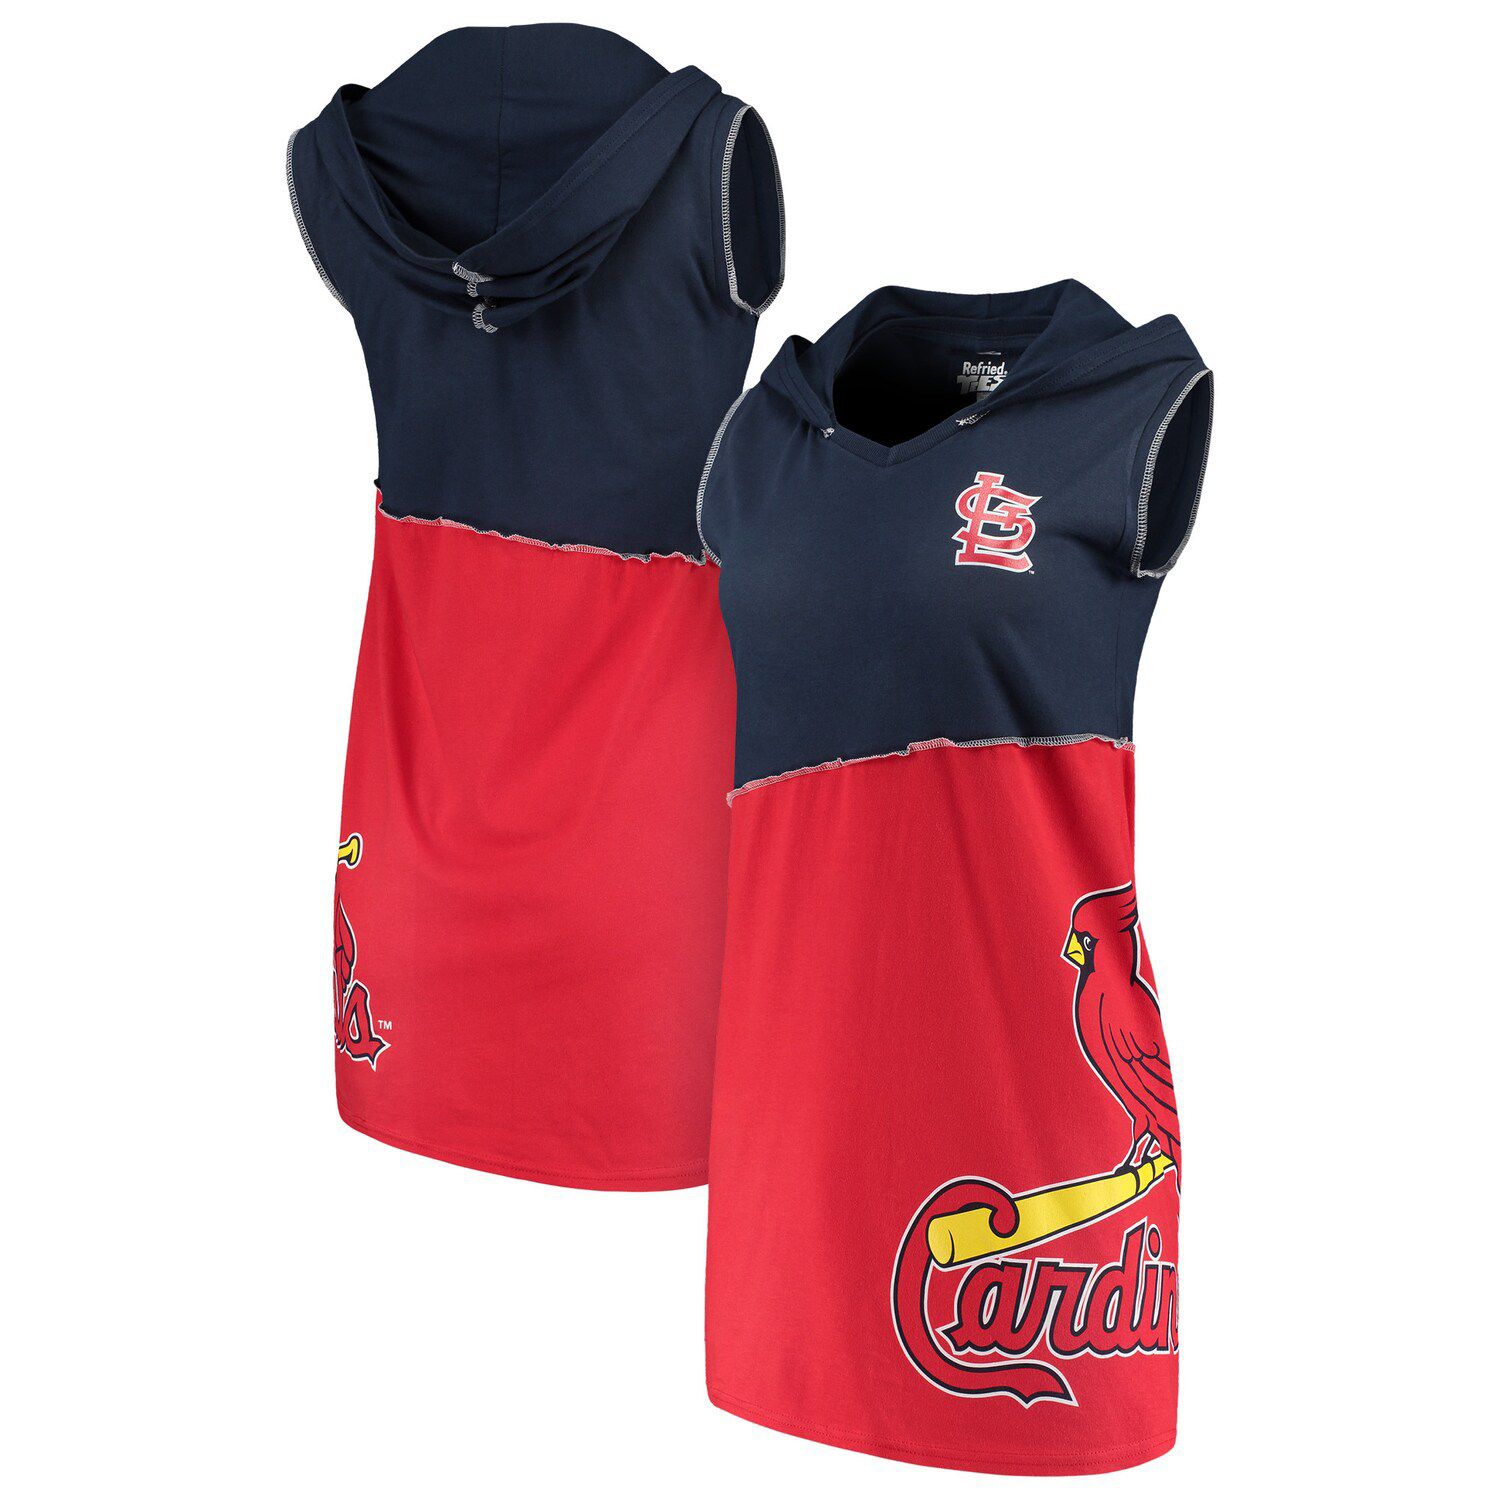 cardinals jersey dress